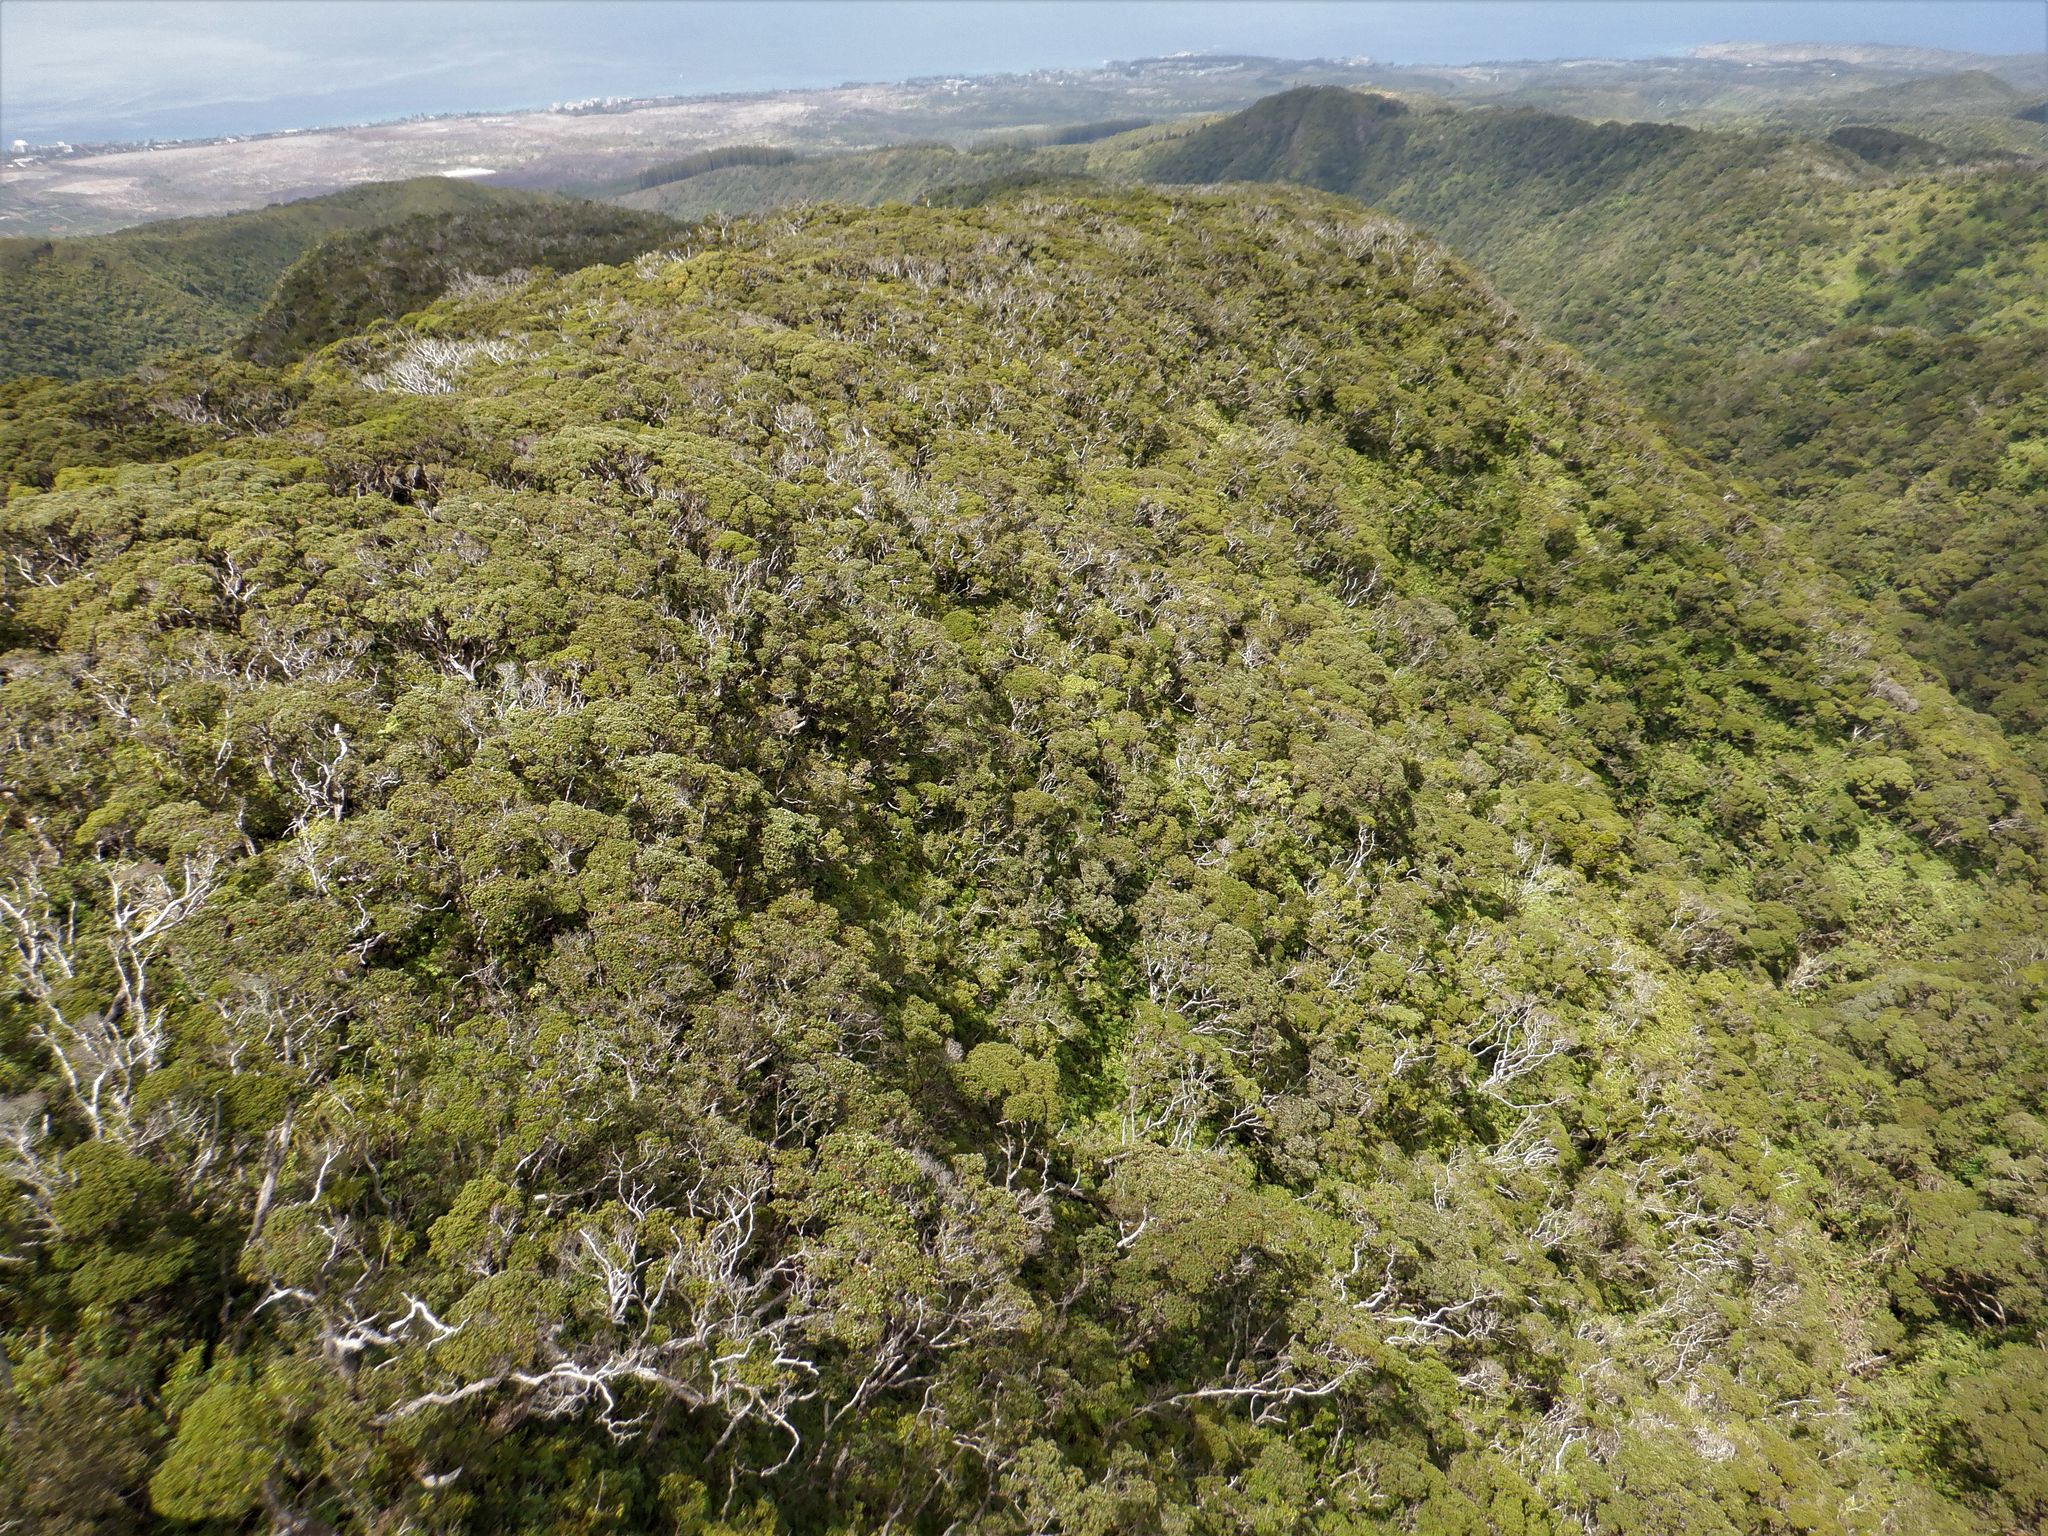 Koa trees in the Honokawai section of the West Maui NAR